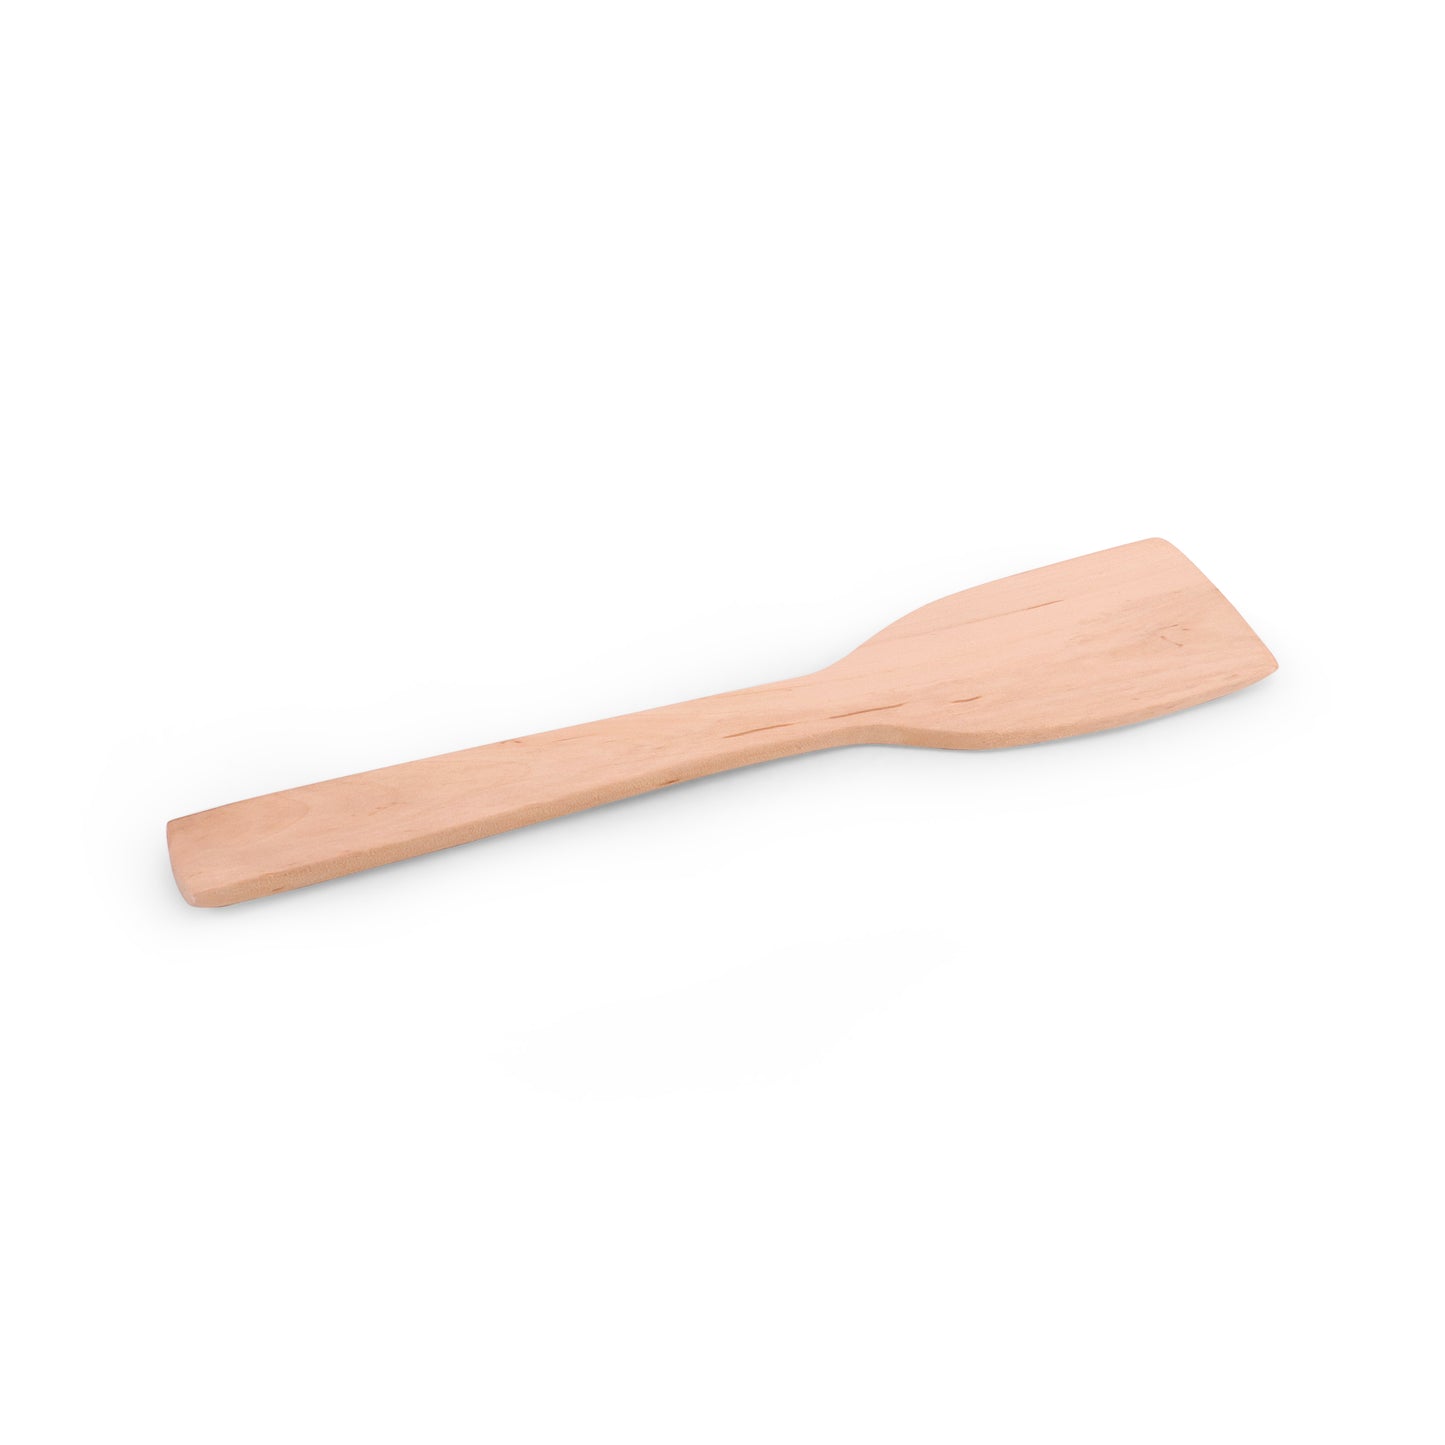 Hand-Carved Wooden Flat Spoon. Pattern: Medium Shovel